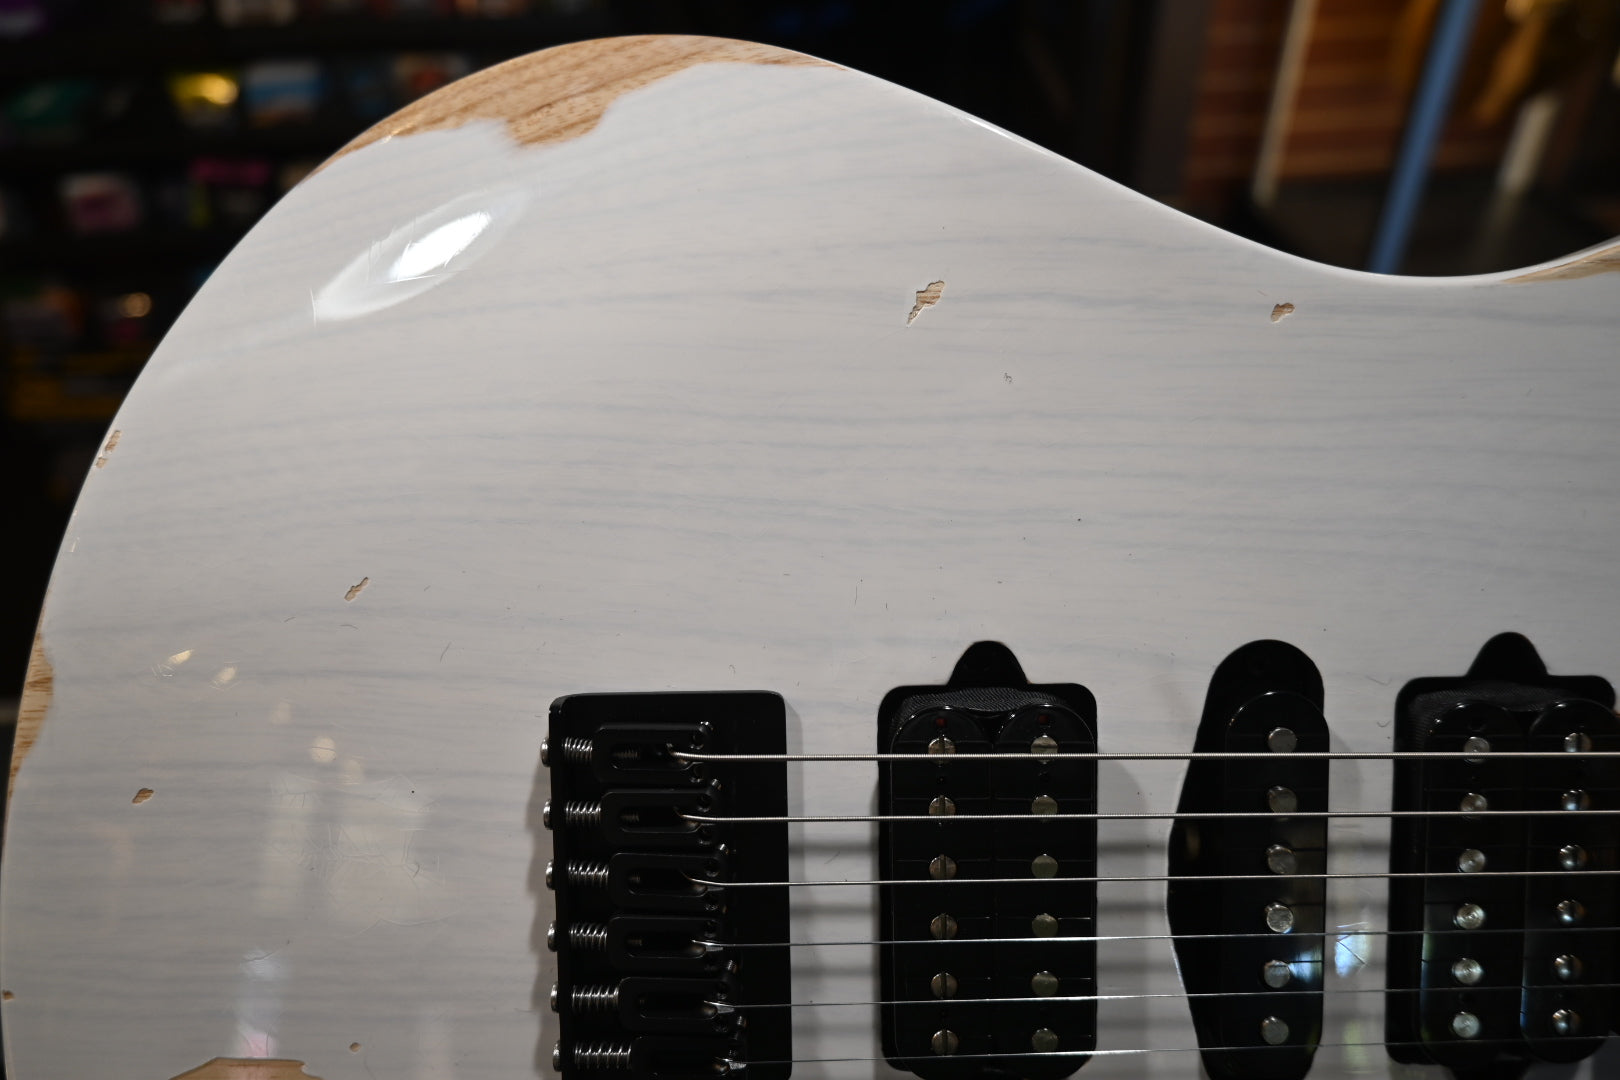 Suhr Custom Modern Antique - Trans White Guitar #5077 - Danville Music